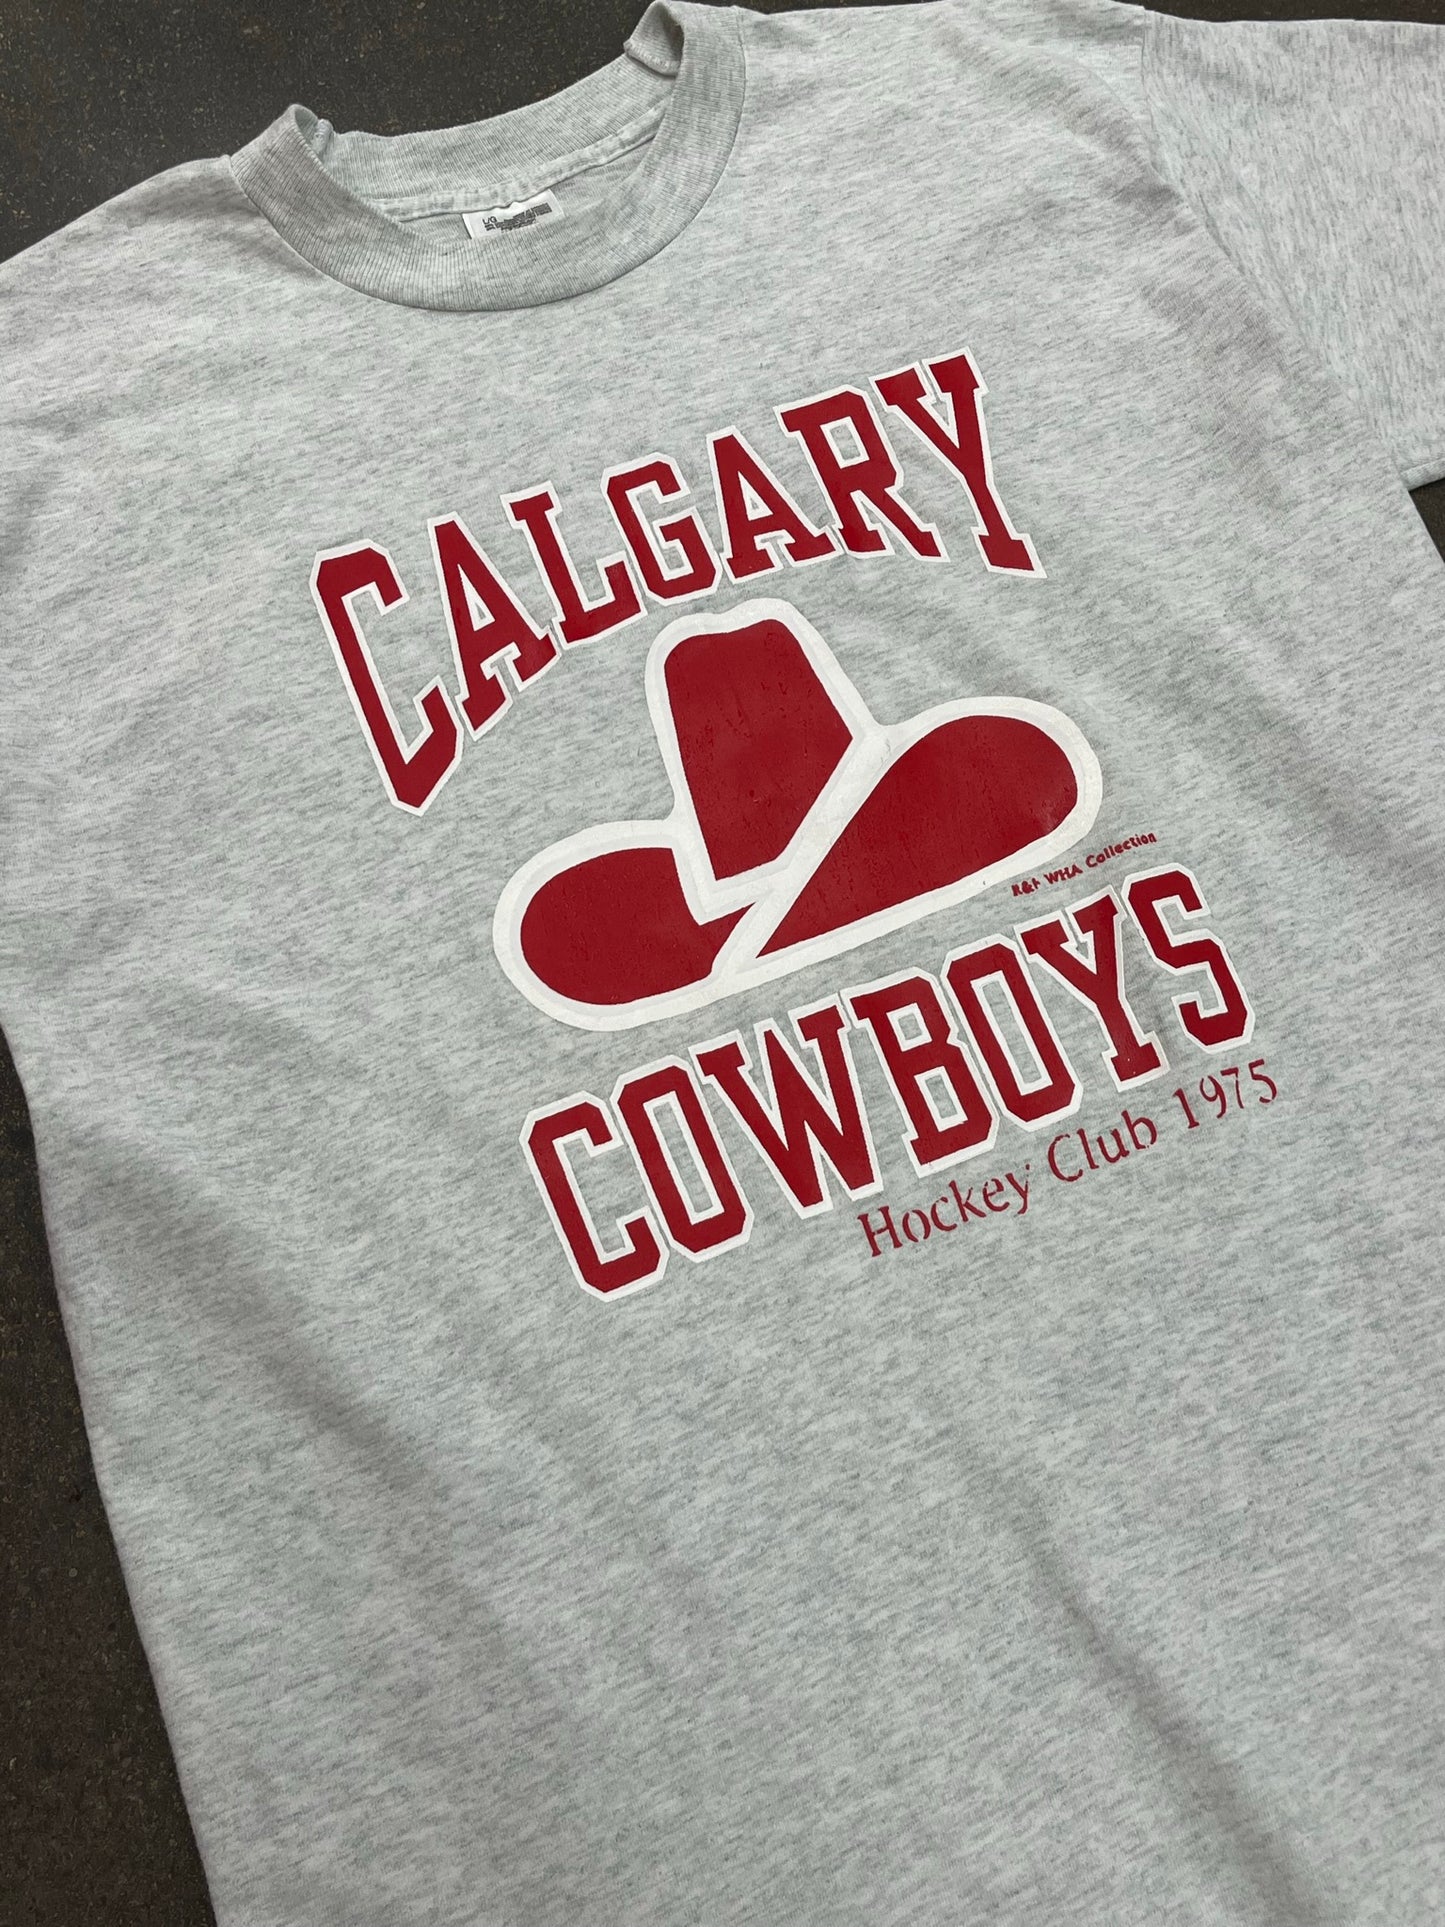 Vintage Calgary Cowboys Tee Size L